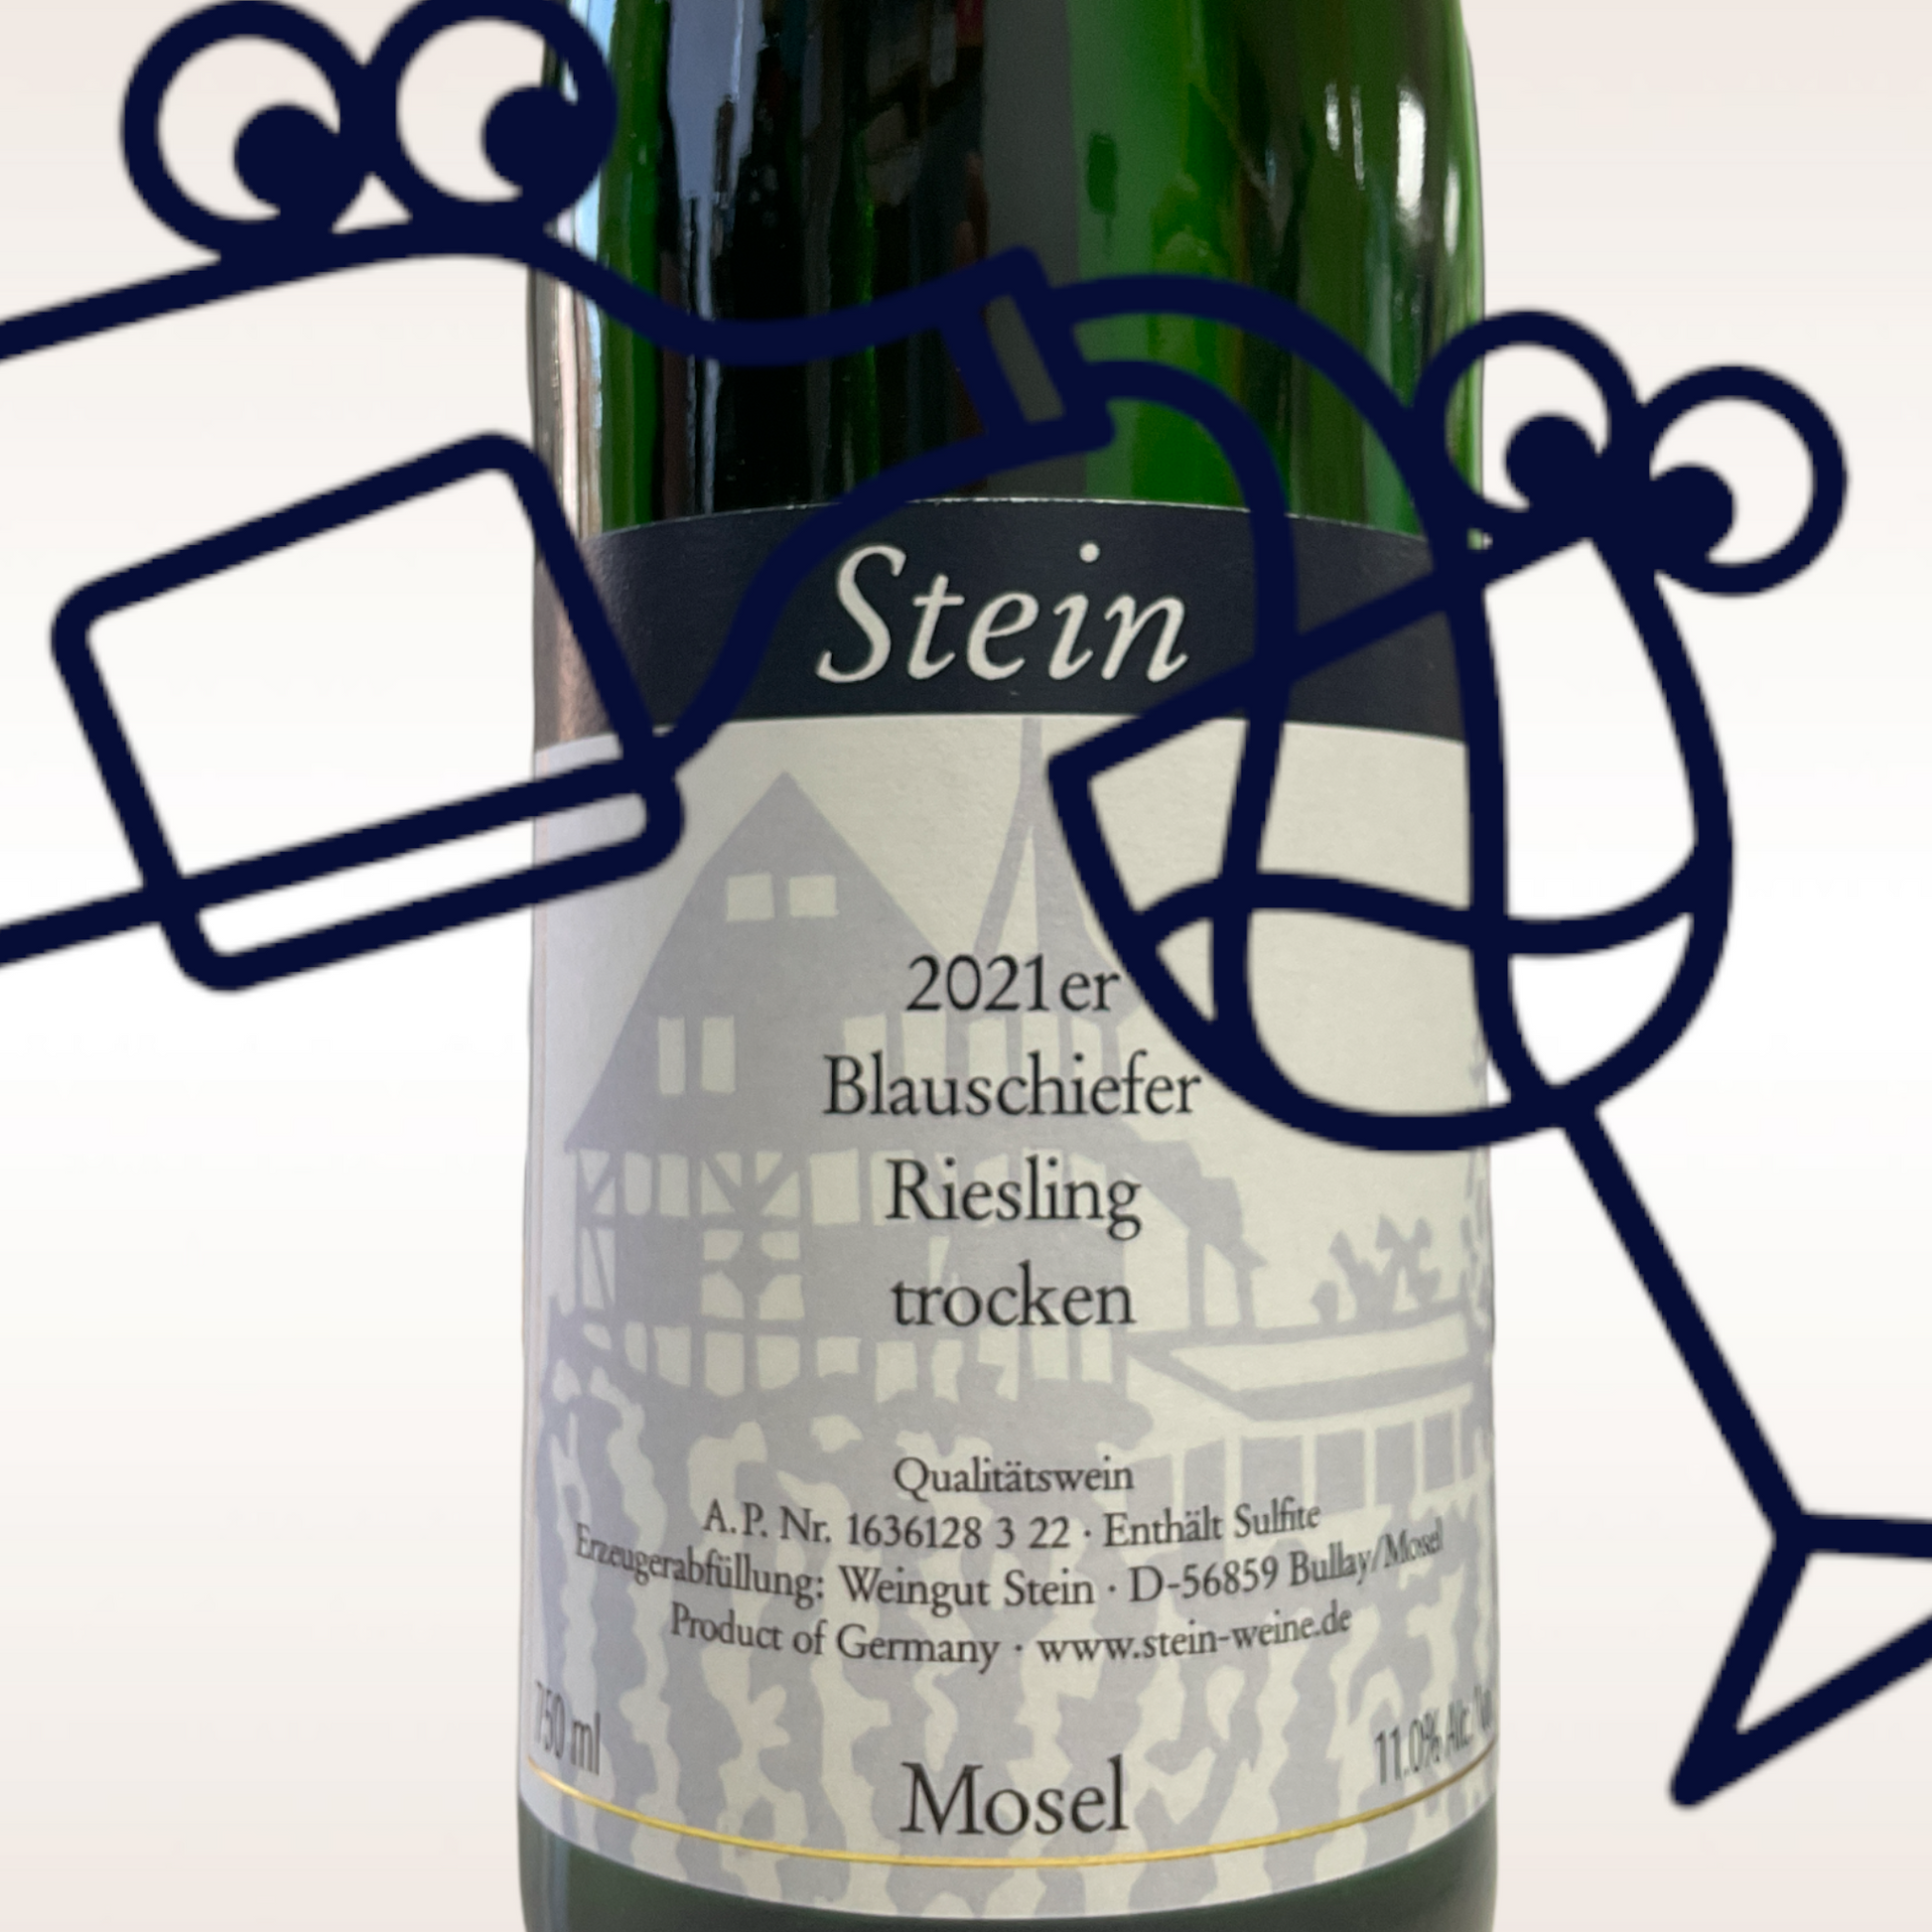 Stein Riesling Blauschiefer Trocken 2022 Mosel, Germany - Williston Park Wines & Spirits